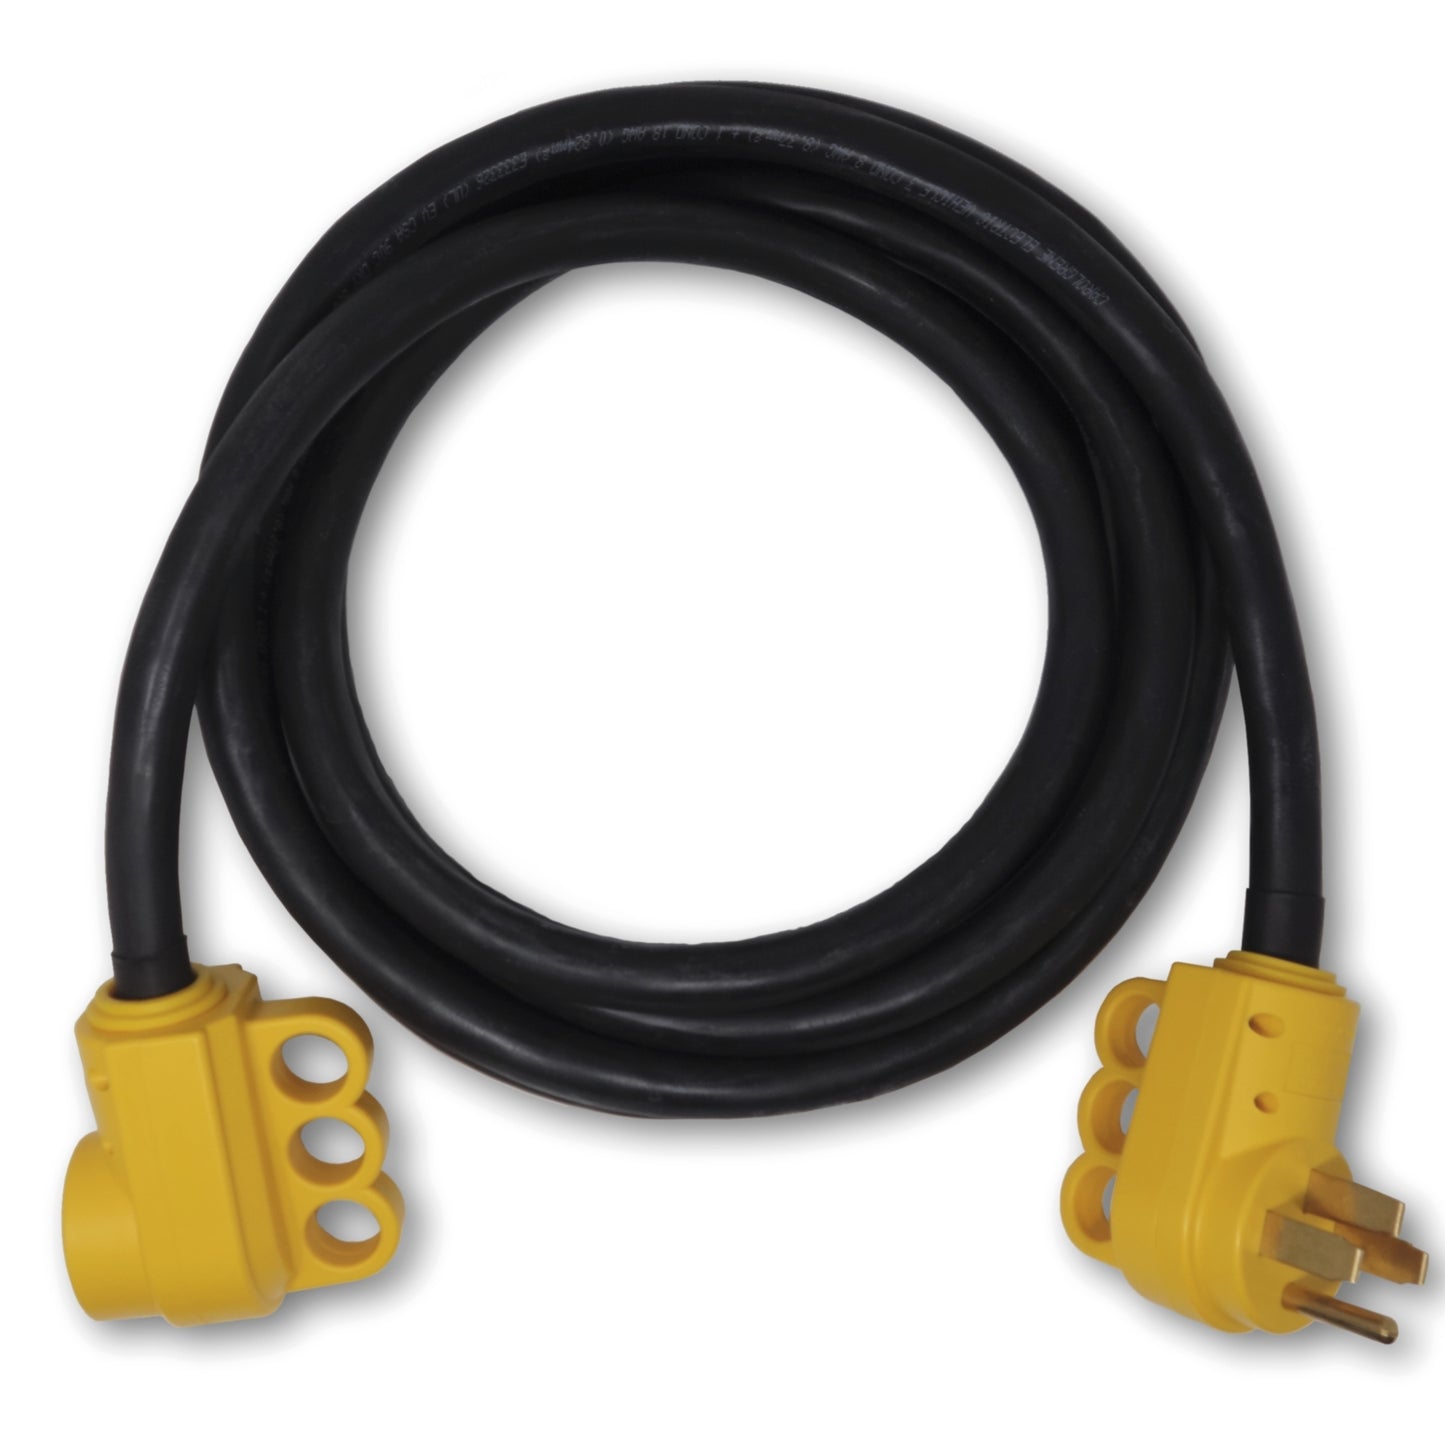 Inteset 20ft EV Extension Cable - NEMA 14-50 - 50amp - Ultra Flex - Made in USA